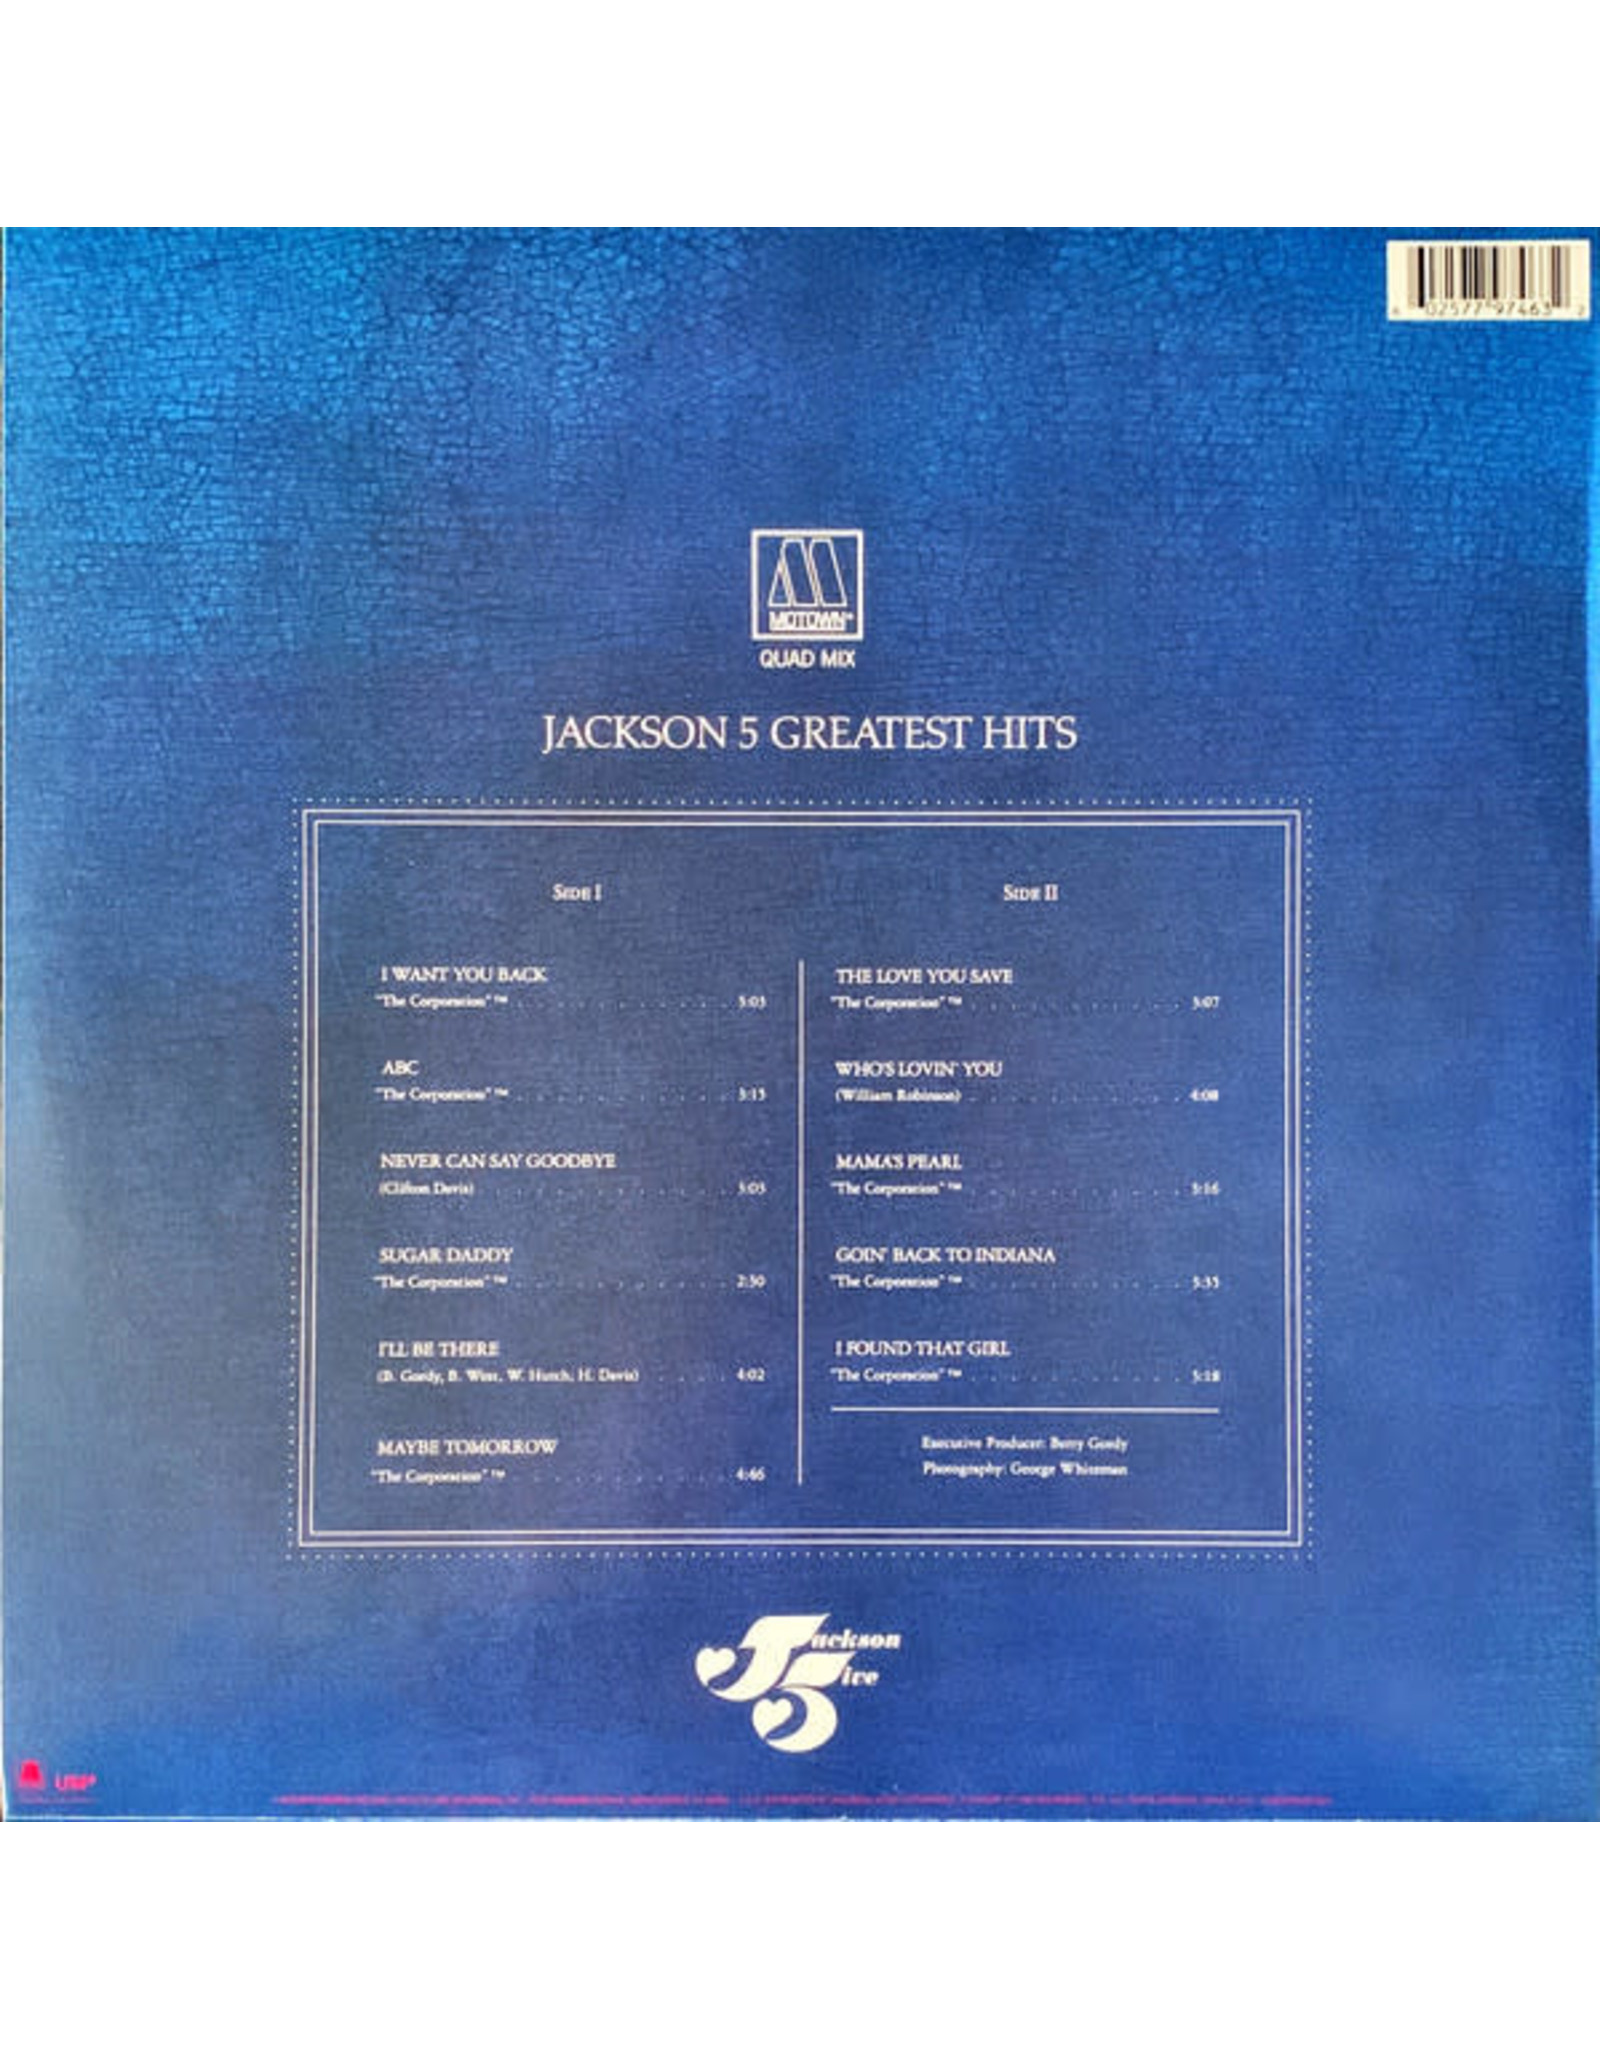 Jackson 5 - Greatest Hits (Quad Mix)